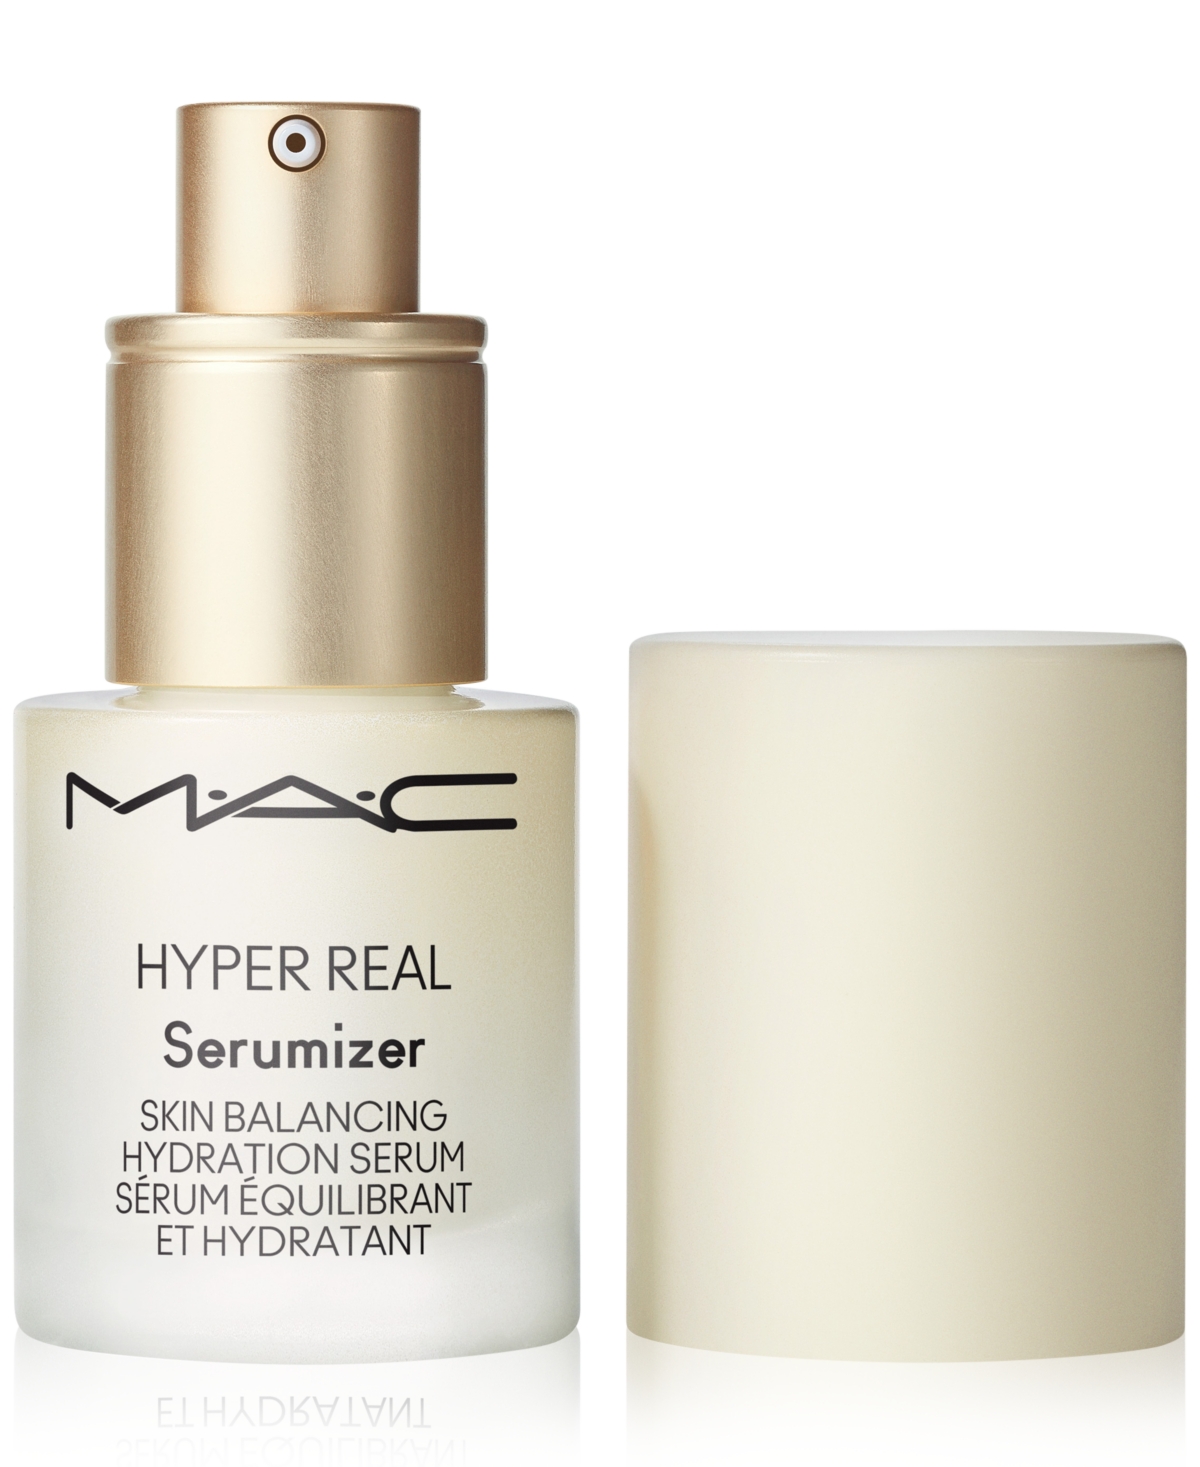 Mac Hyper Real Serumizer Skin Balancing Hydration Serum 0.5 Oz. In No Color